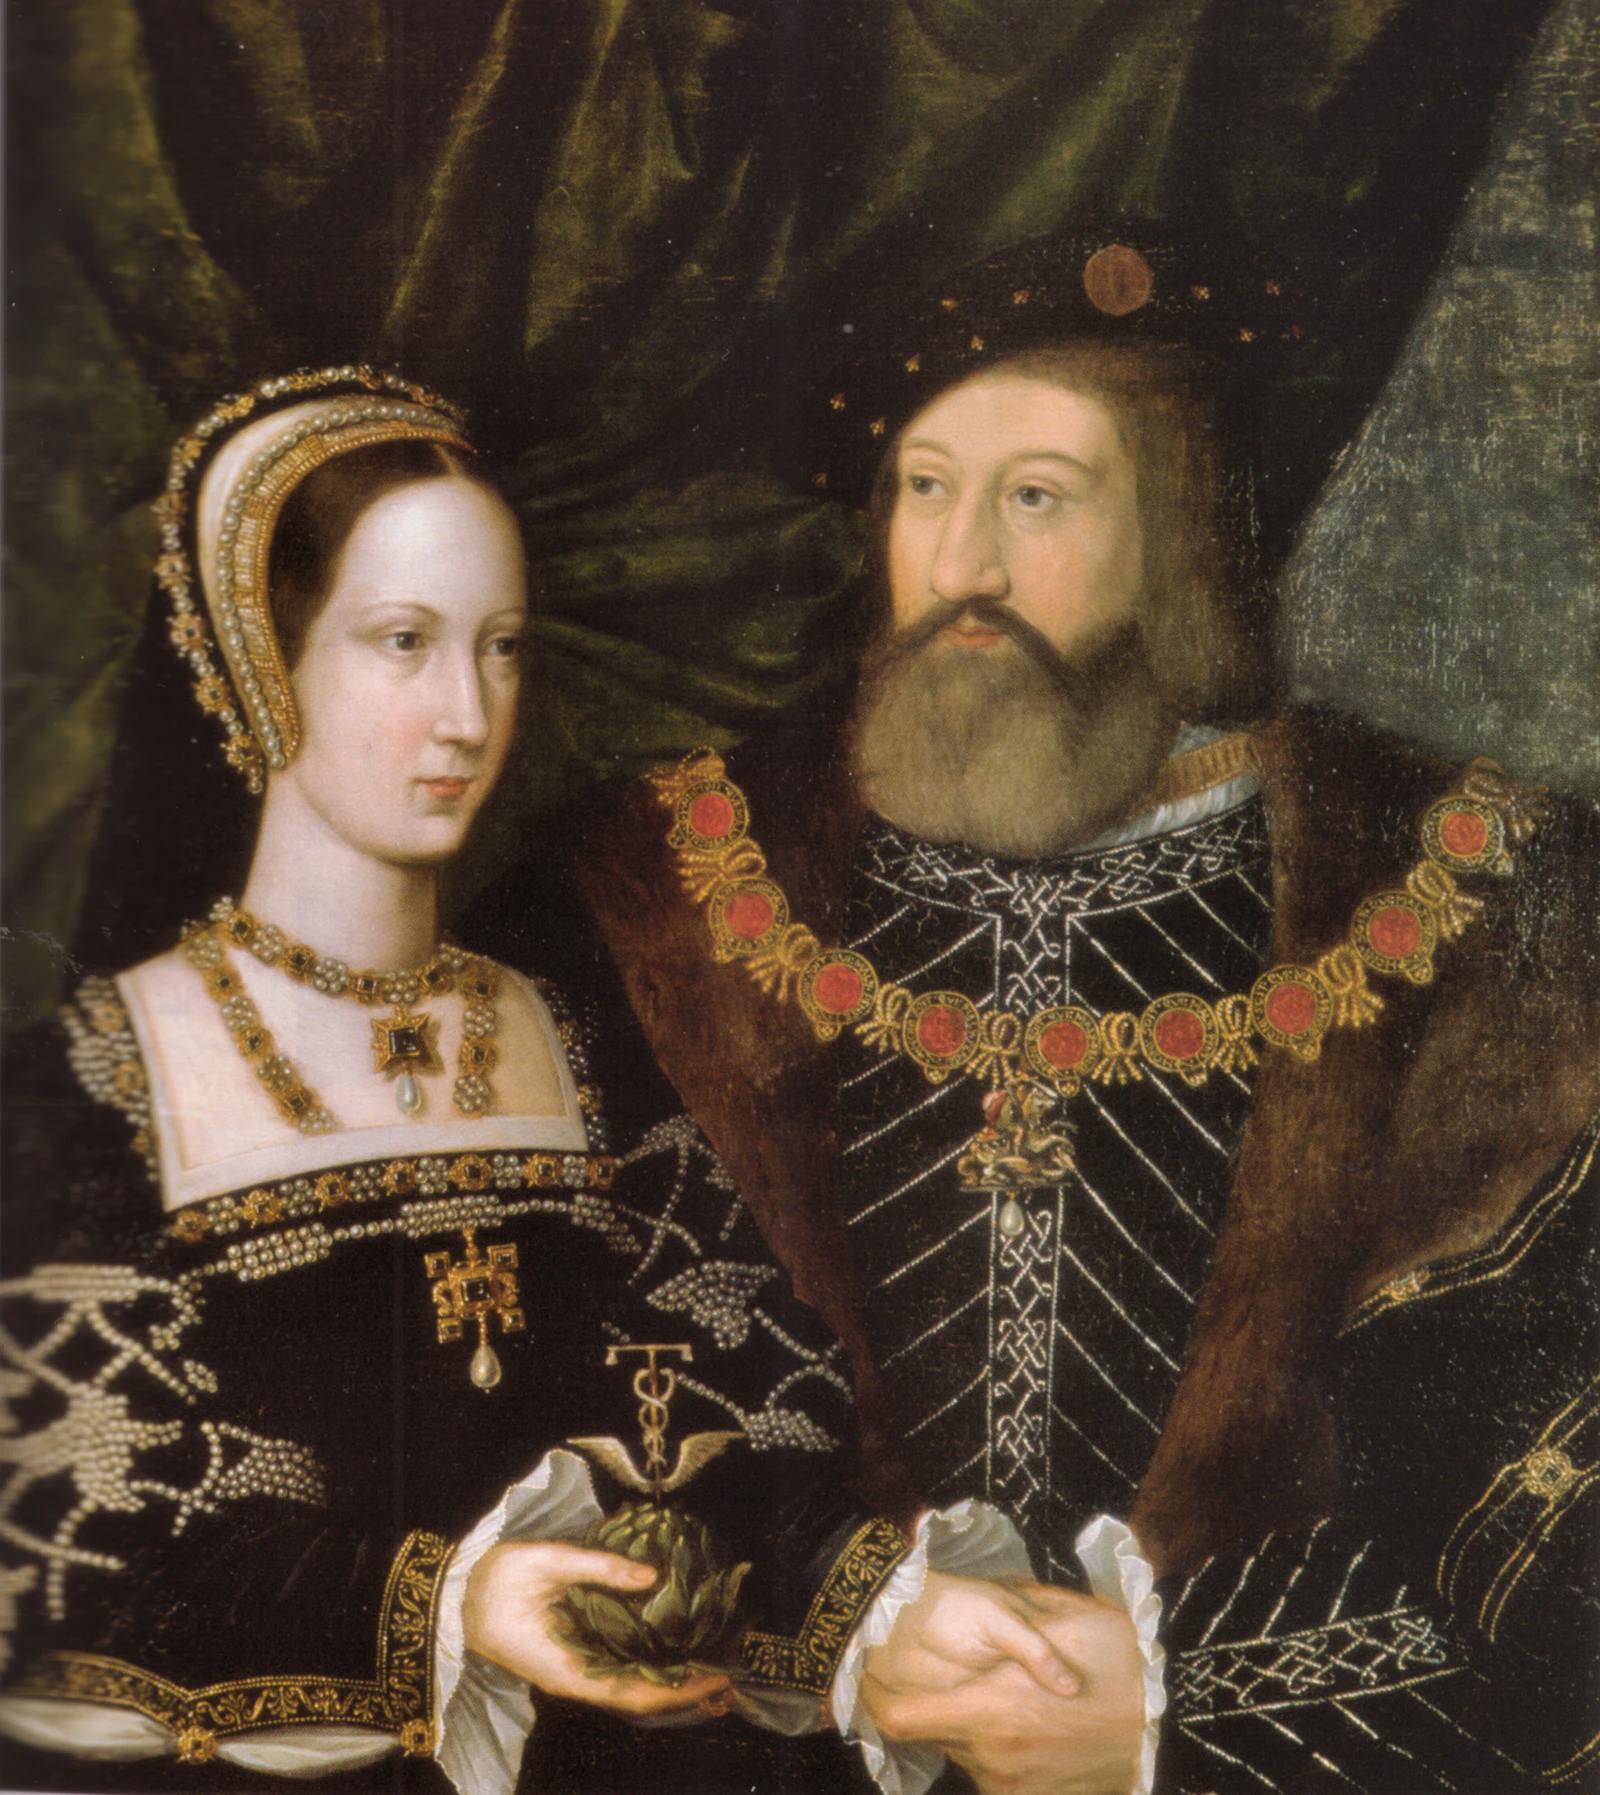 Mary Tudor wearing a French hood and Charles Brandon, Duke of Suffolk, attributed to Jan Gossaert, c. 1516. Public domain via Wikimedia Commons.